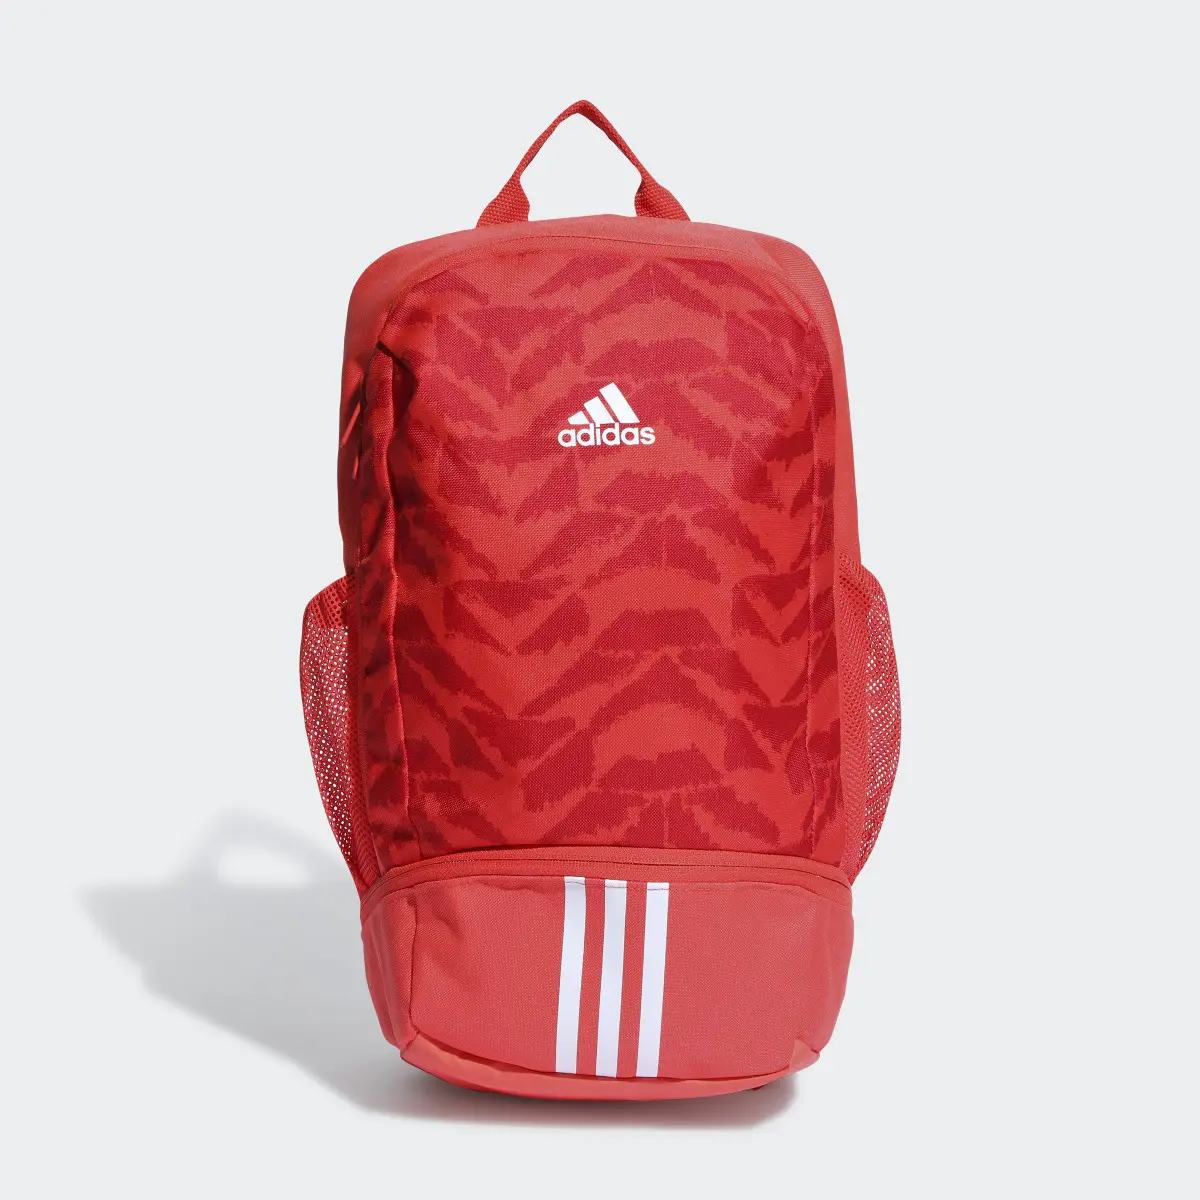 Adidas Football Backpack. 2